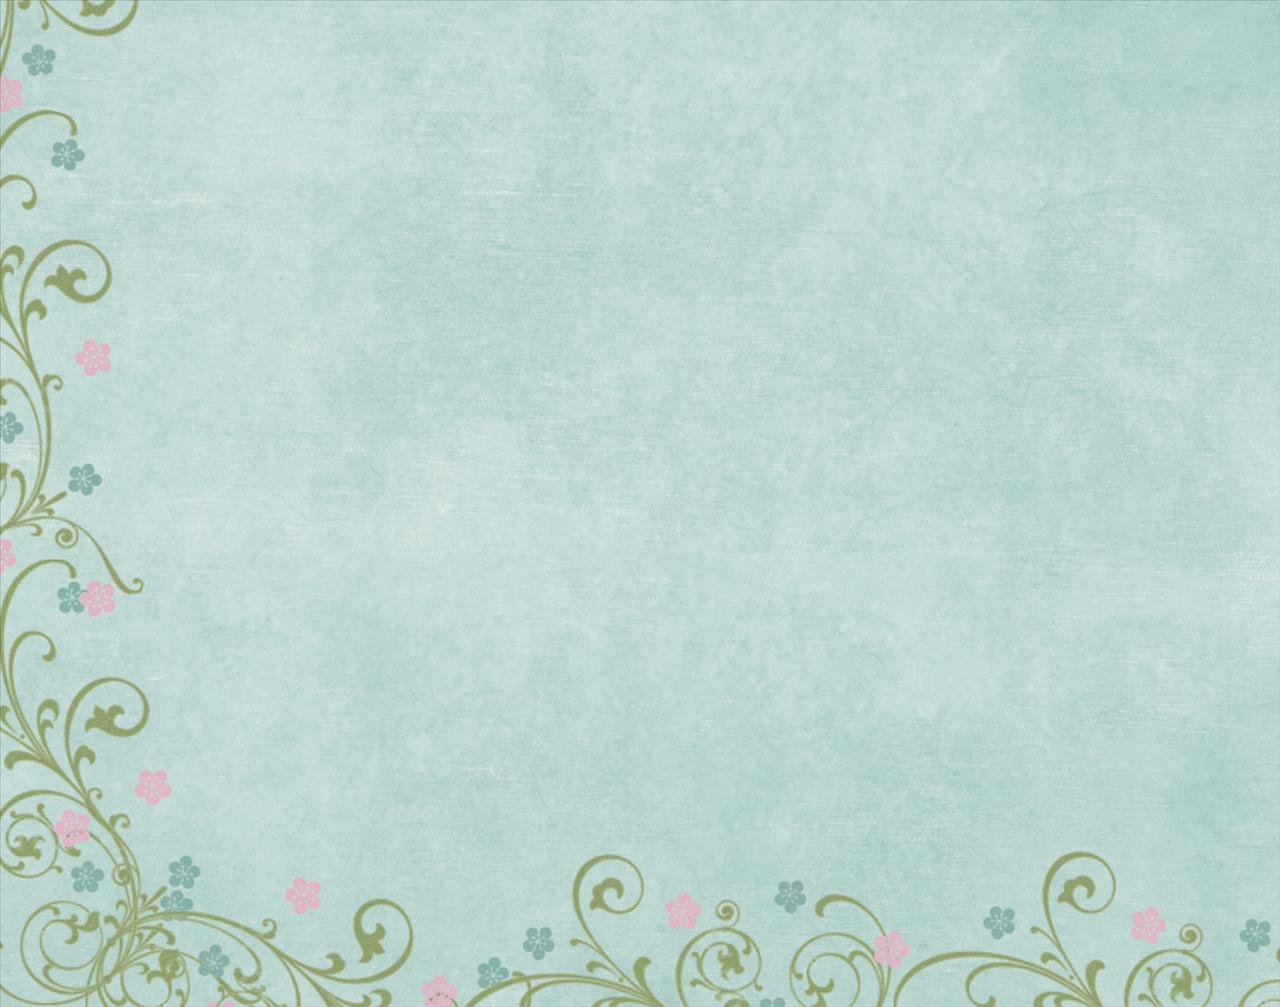 Flower Scroll Blue Background Wallpaper For Powerpoint Presentations